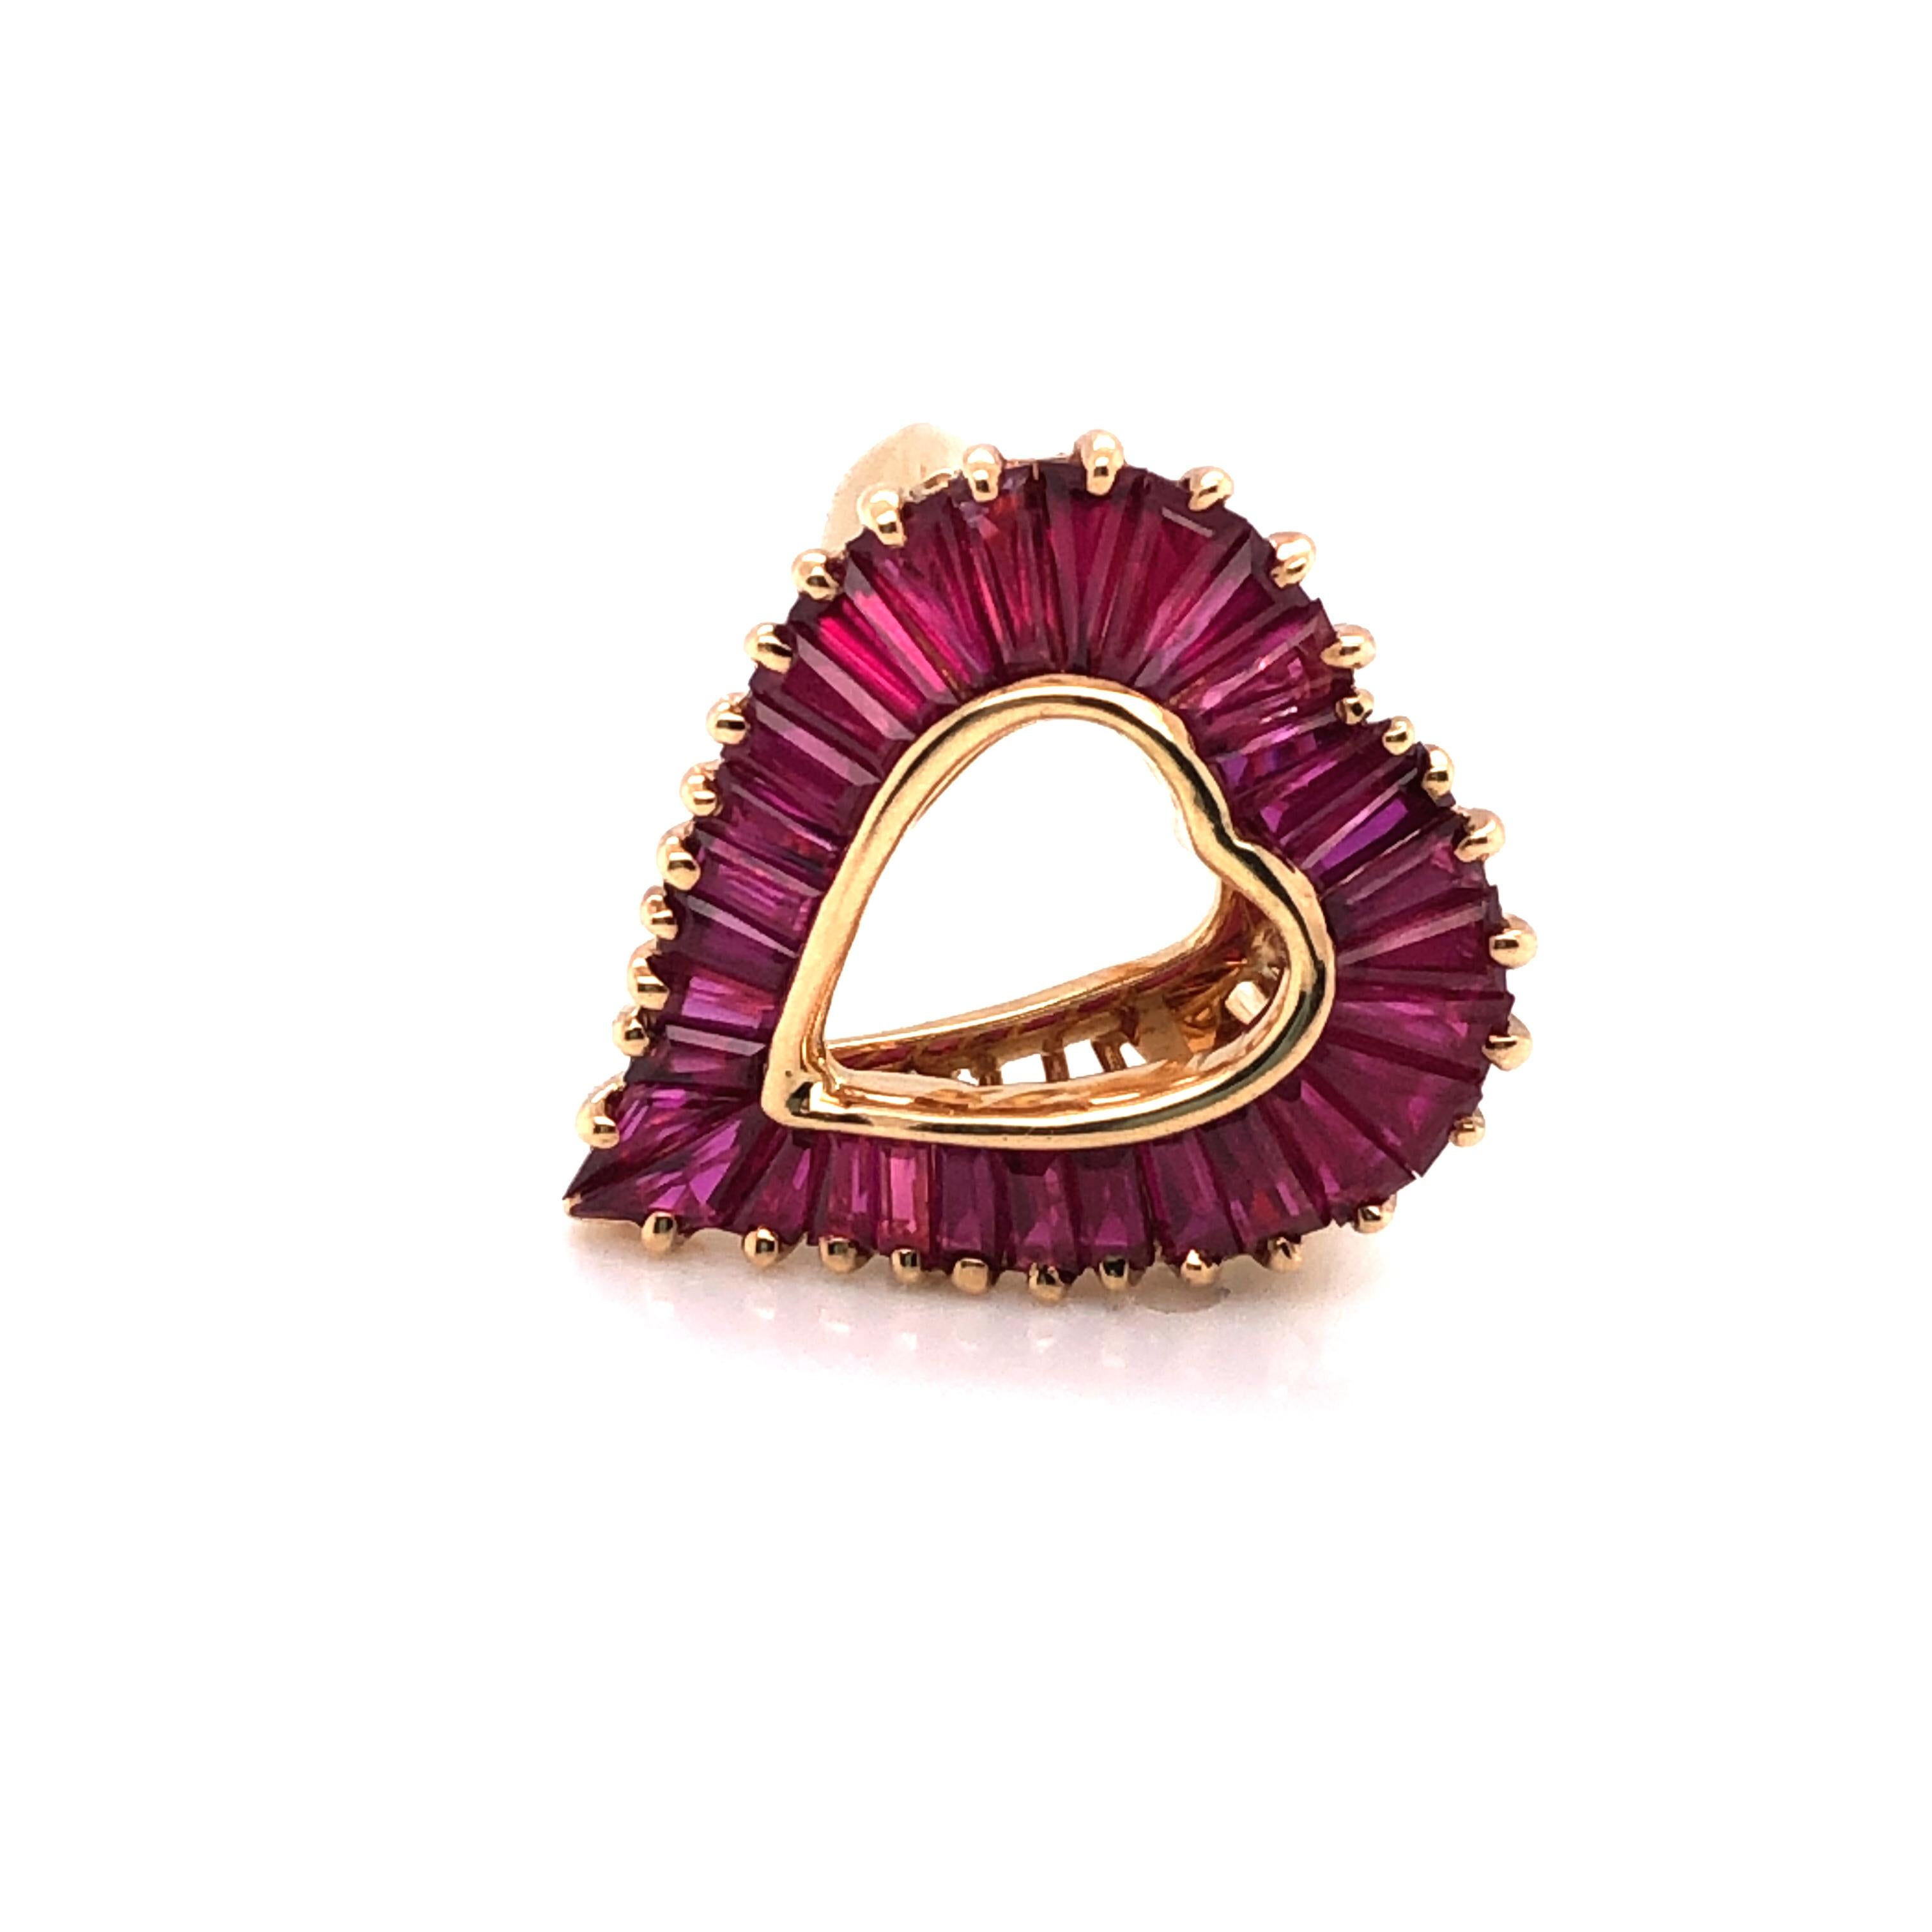 Tapered Baguette Oscar Heyman 18 Karat Gold Ruby Heart Shaped 'Ballerina' Style Ring